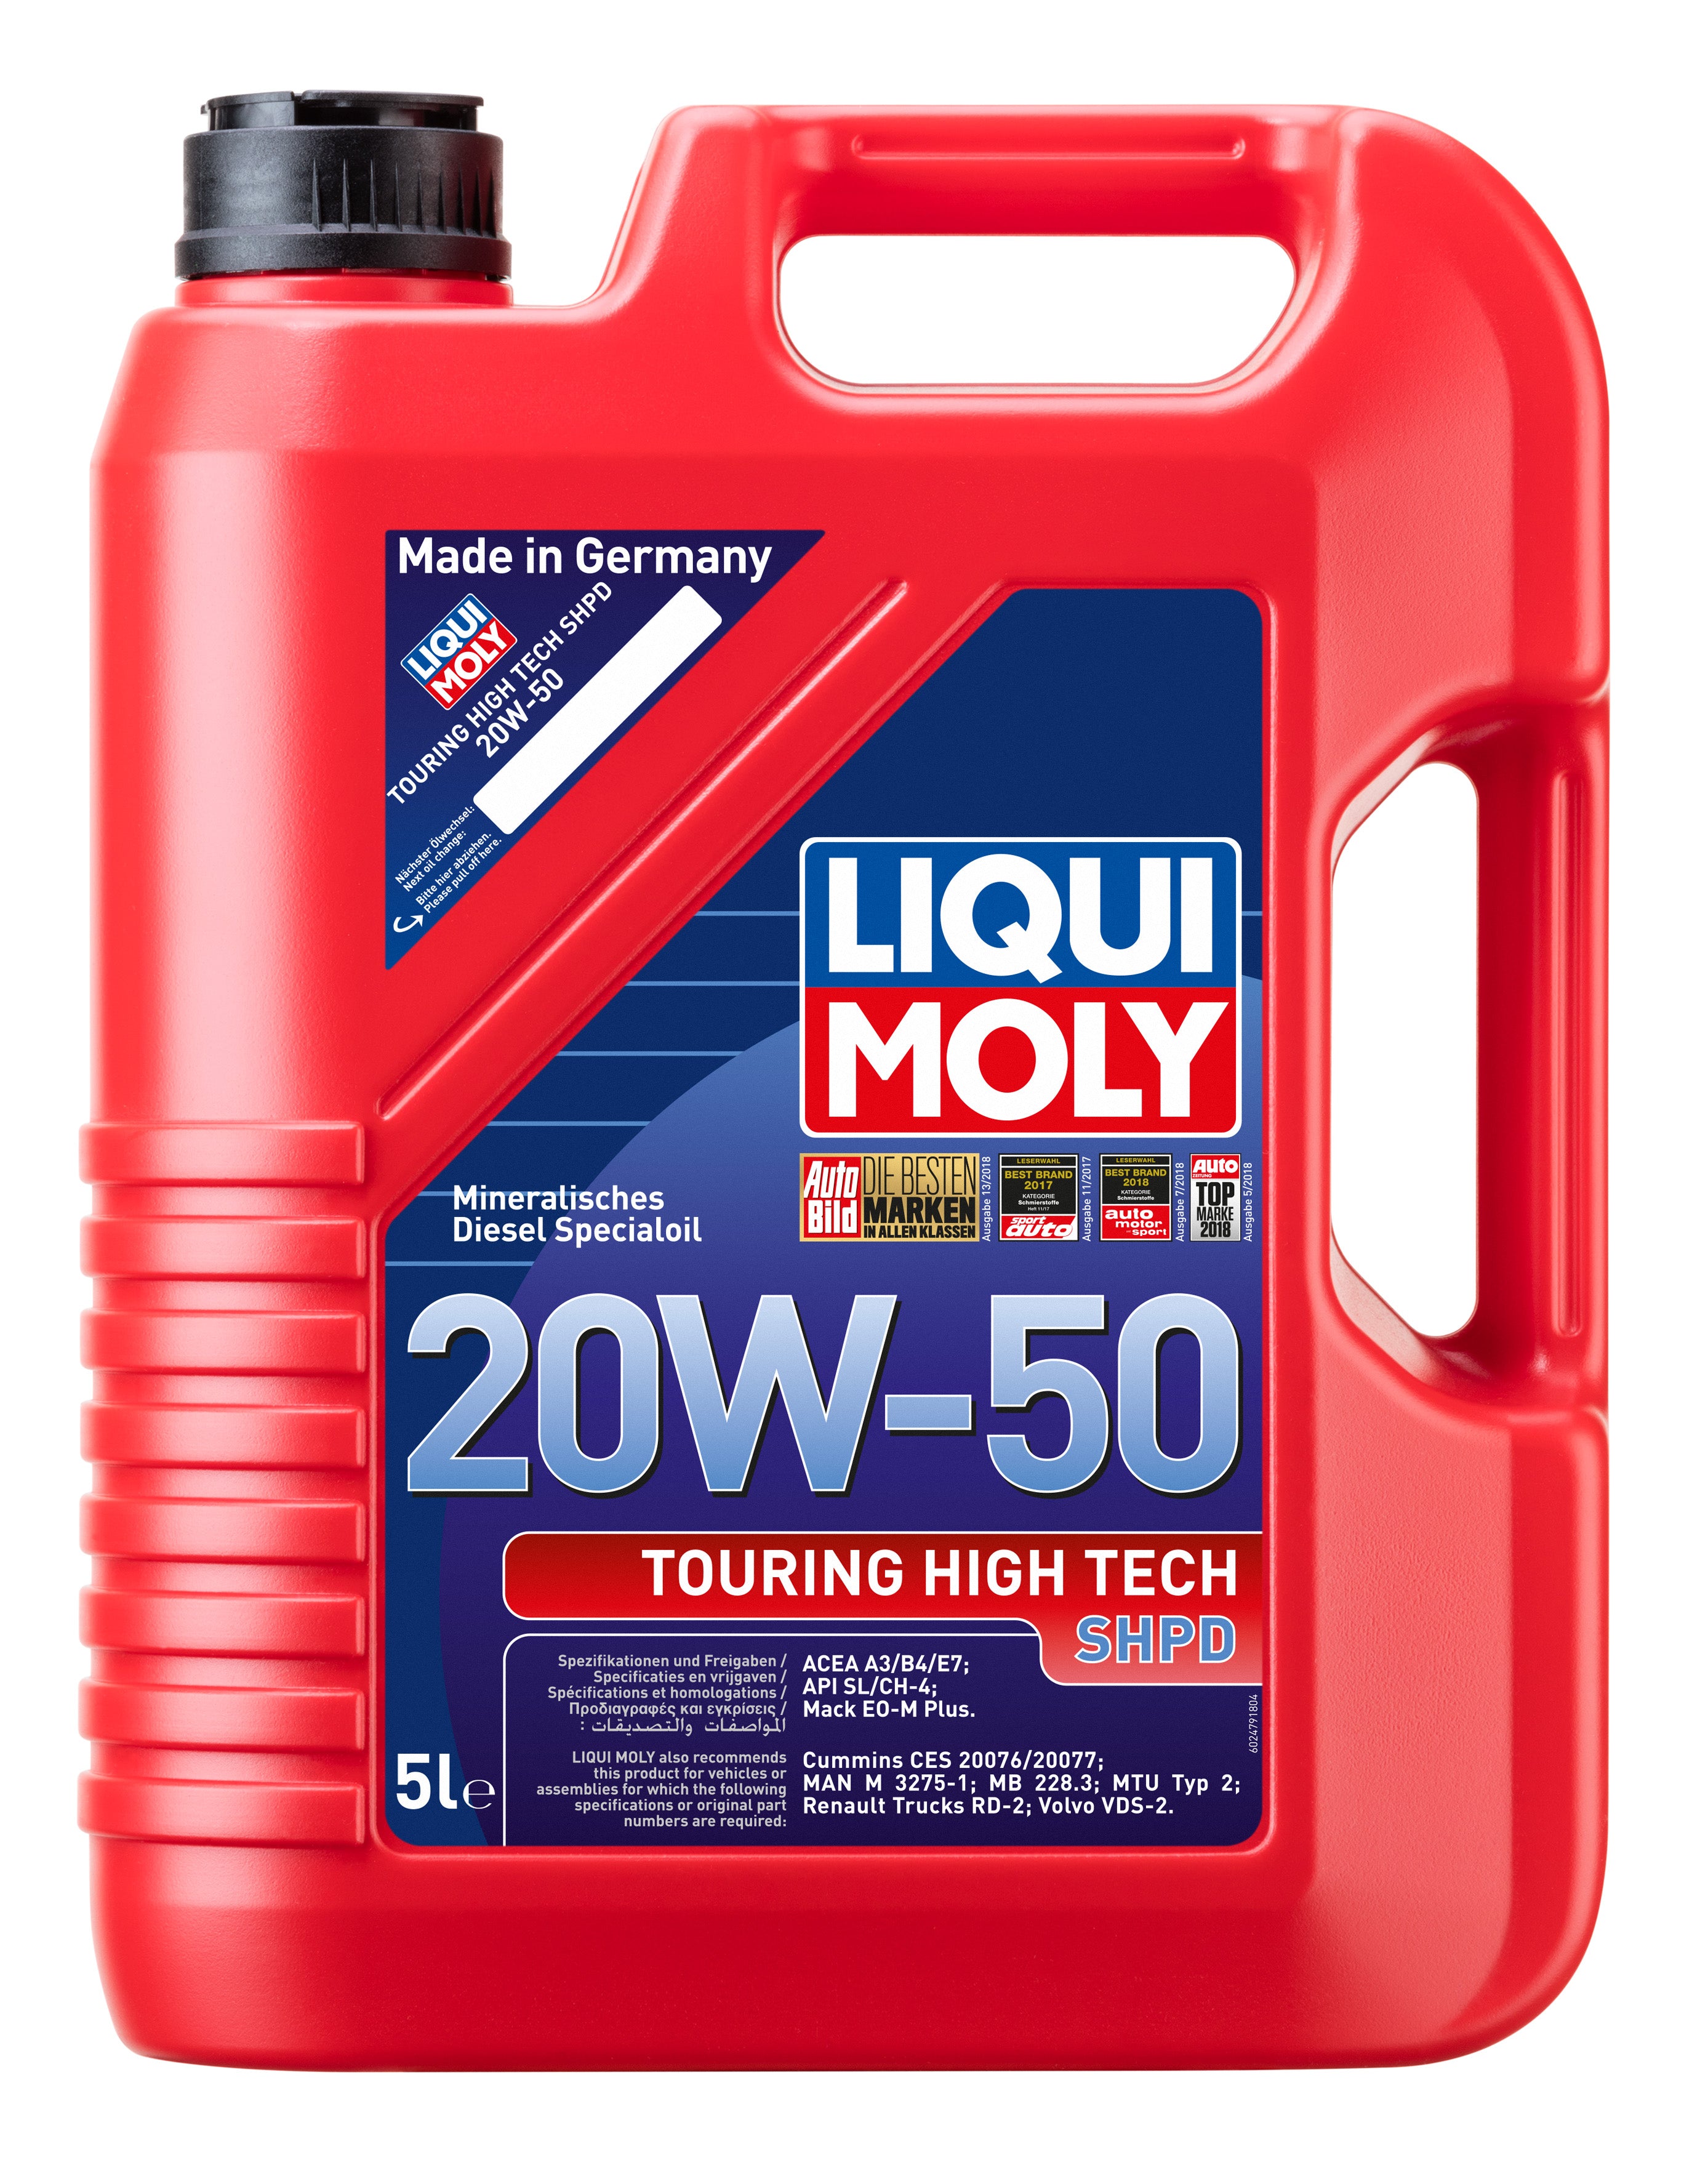 Liqui Moly Touring High Tech- SHPD 20W-50 (5 Liter)